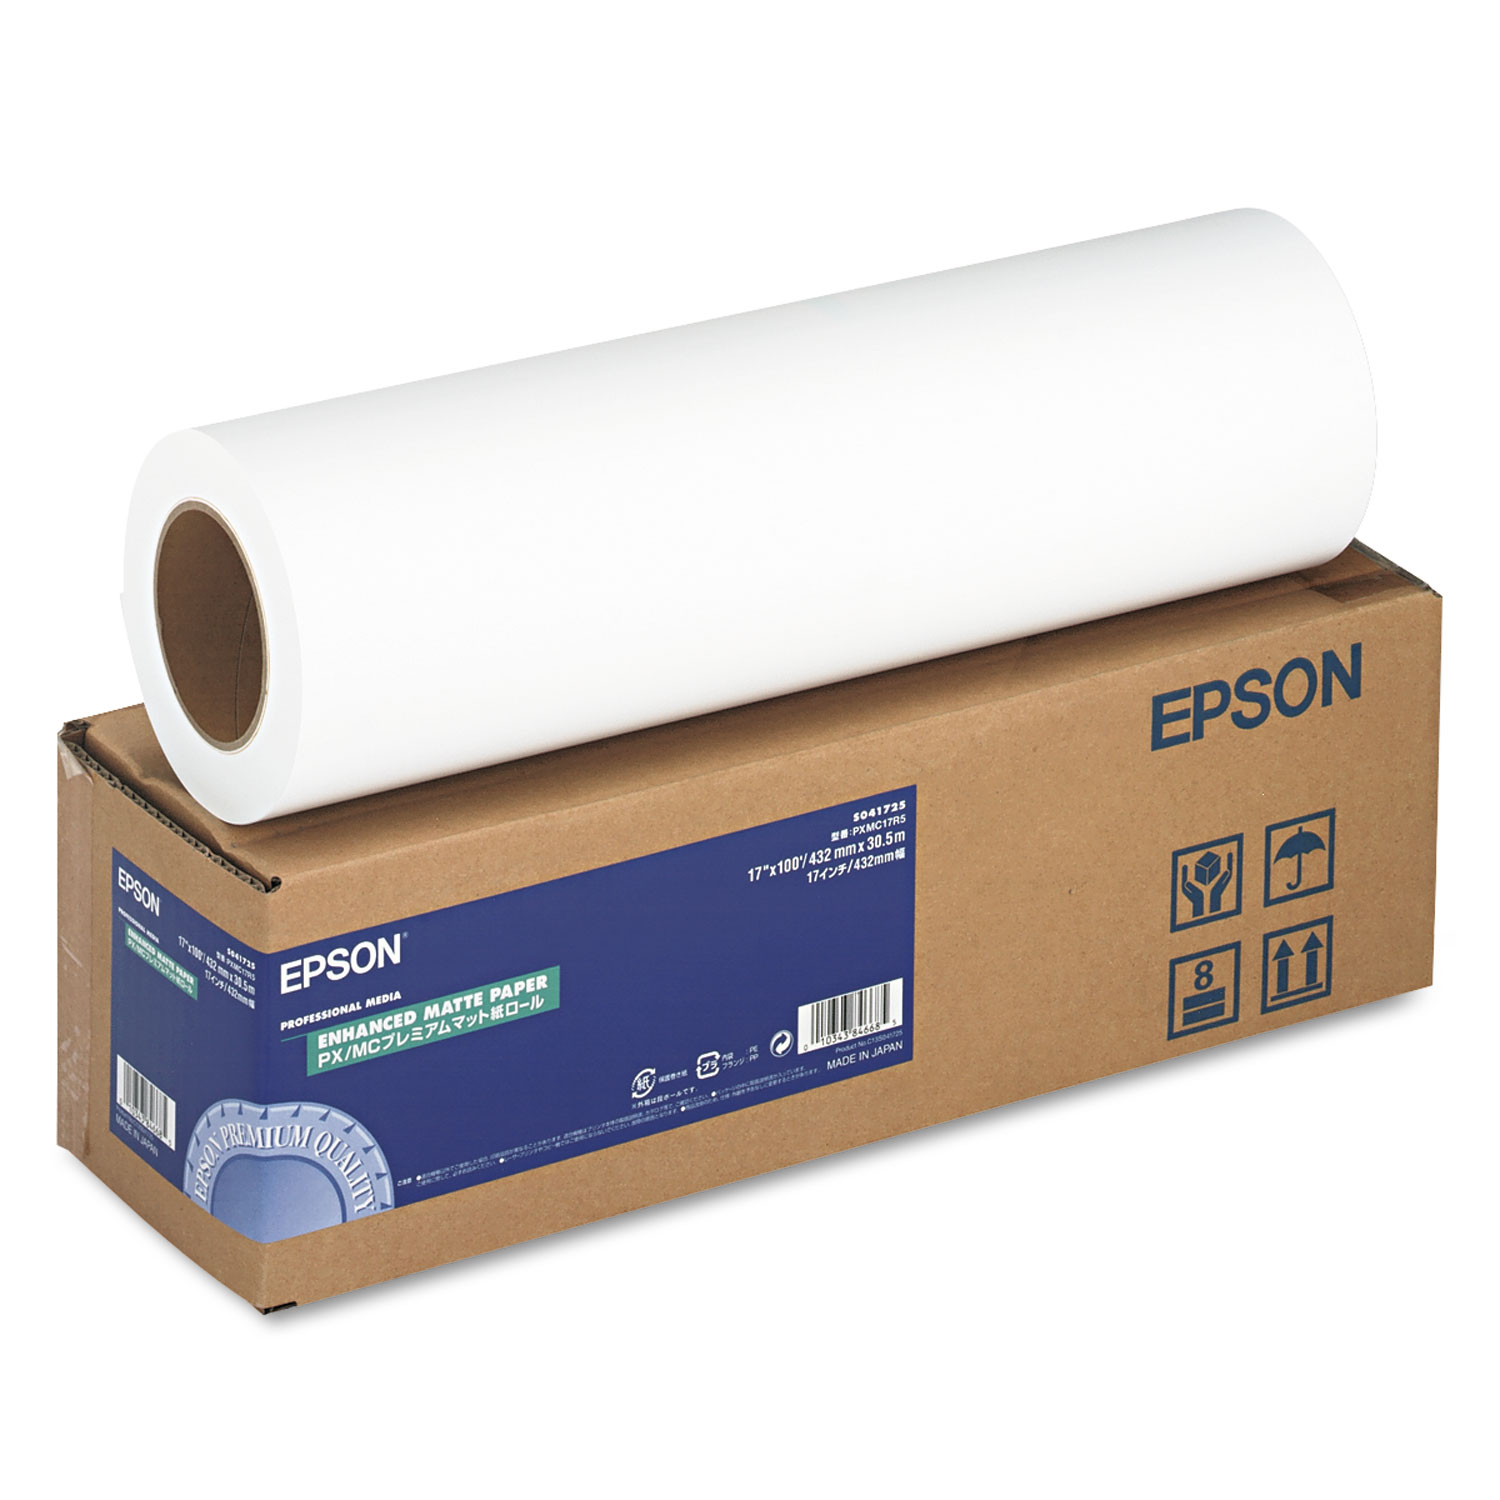  Epson S041725 Enhanced Photo Paper Roll, 3 Core, 17 x 100 ft, Matte Bright White (EPSS041725) 